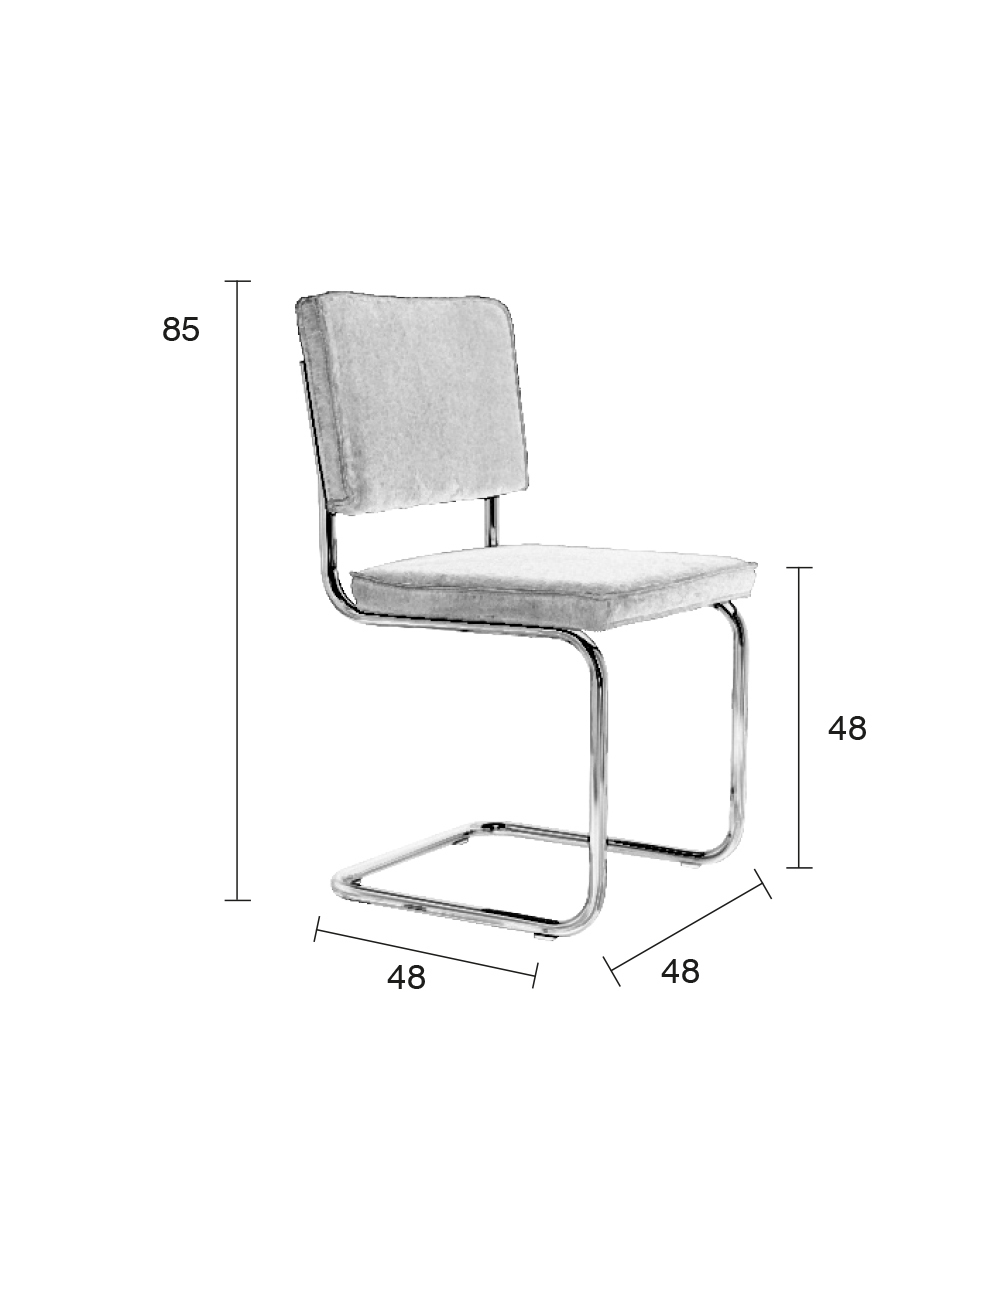 https://www.fundesign.nl/media/catalog/product/r/i/ridge-rib-chair-size_9.jpg